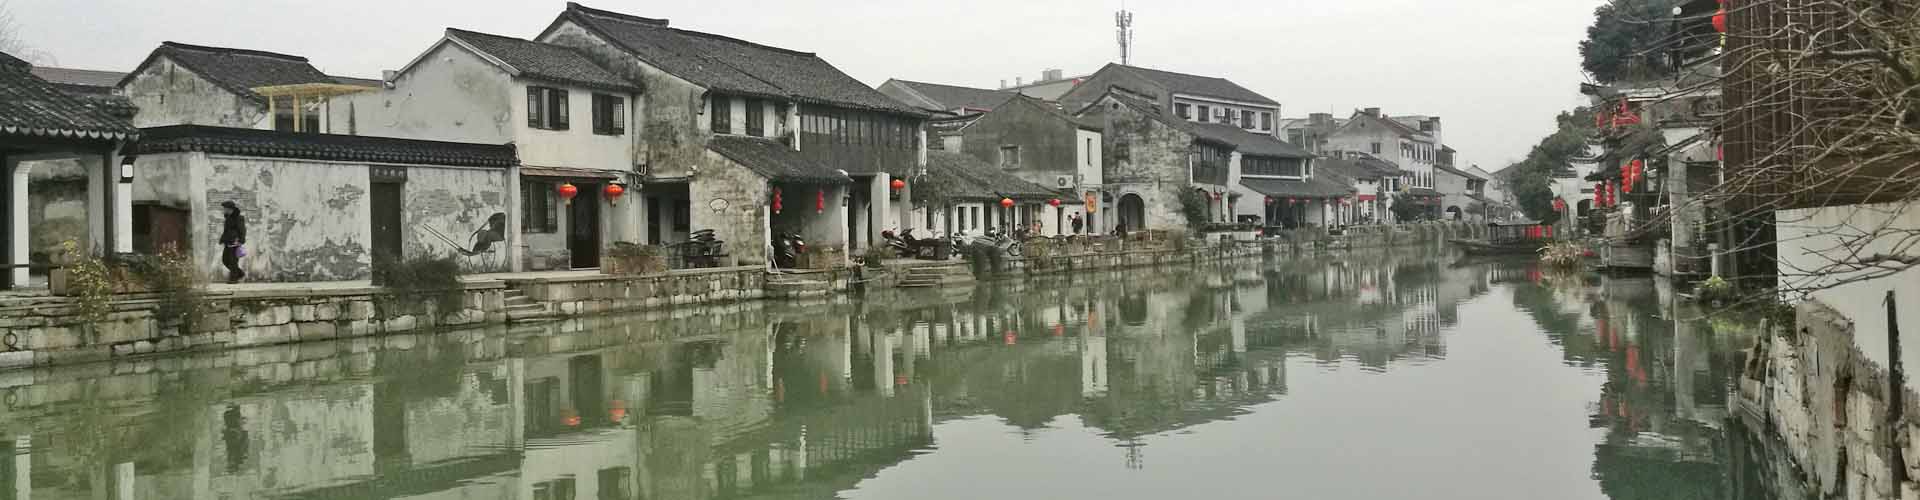 village d'eau de Xitang